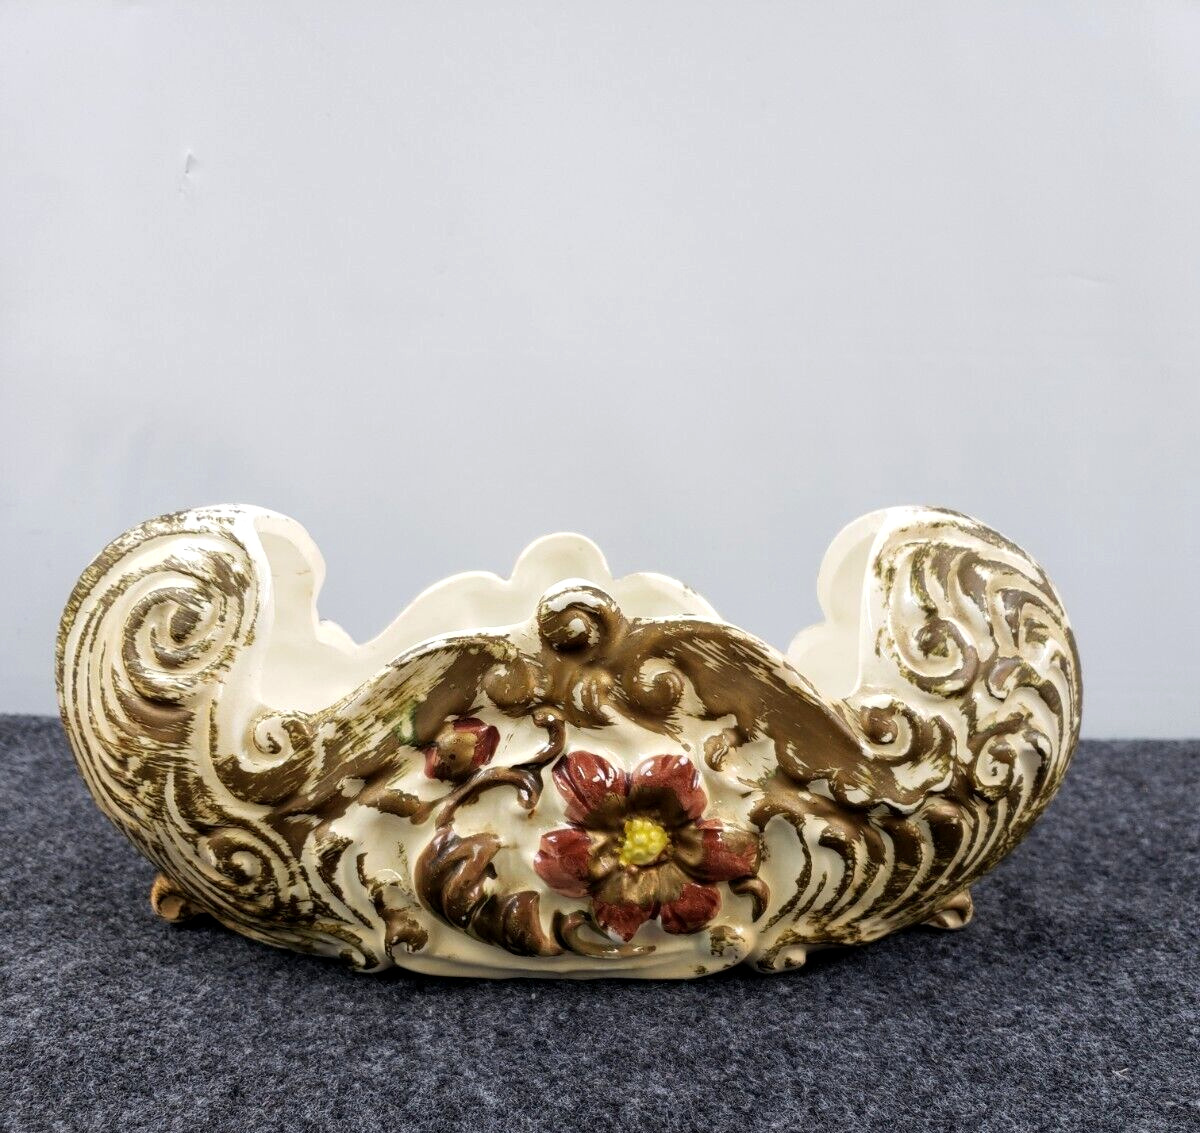 Vintage Ceramic planter ornate by Acson Japan Gold scroll floral 10in foil label